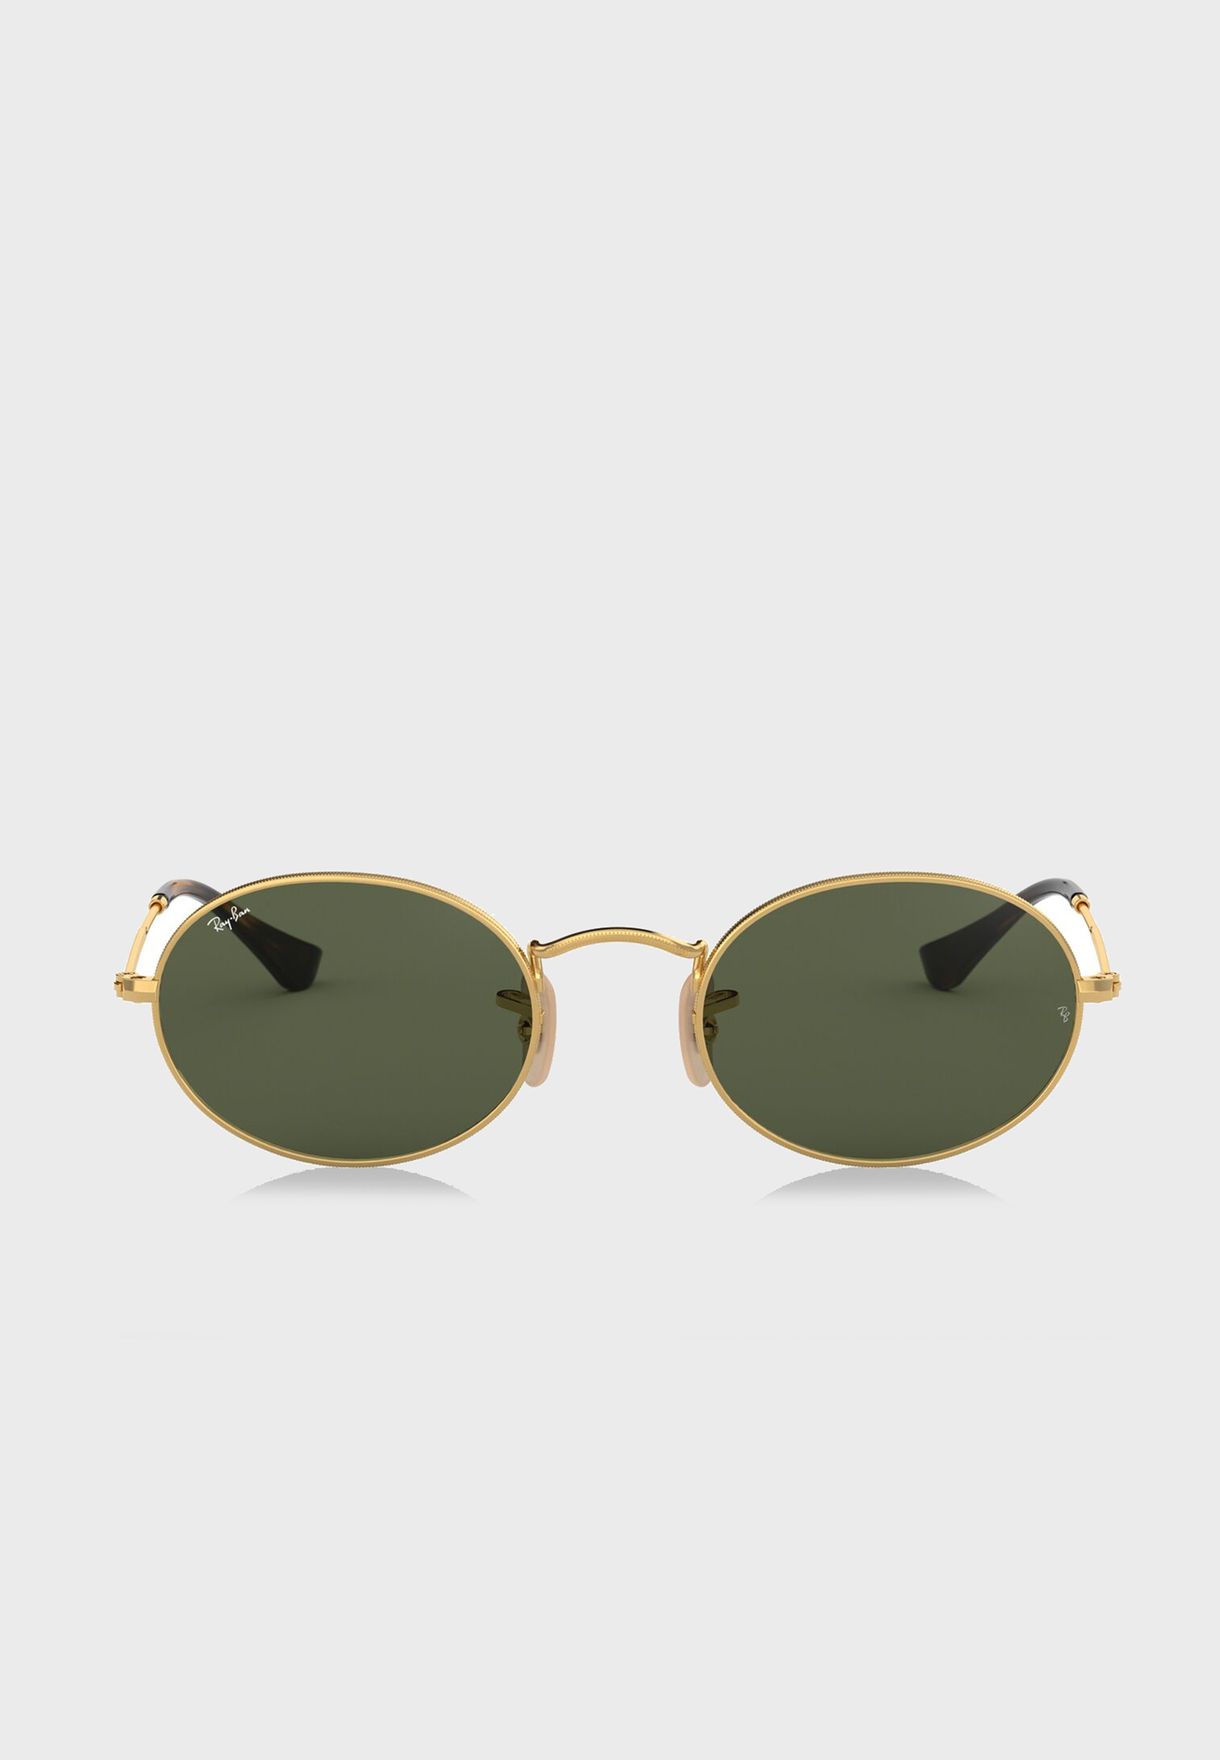 original ray ban sunglasses price in uae